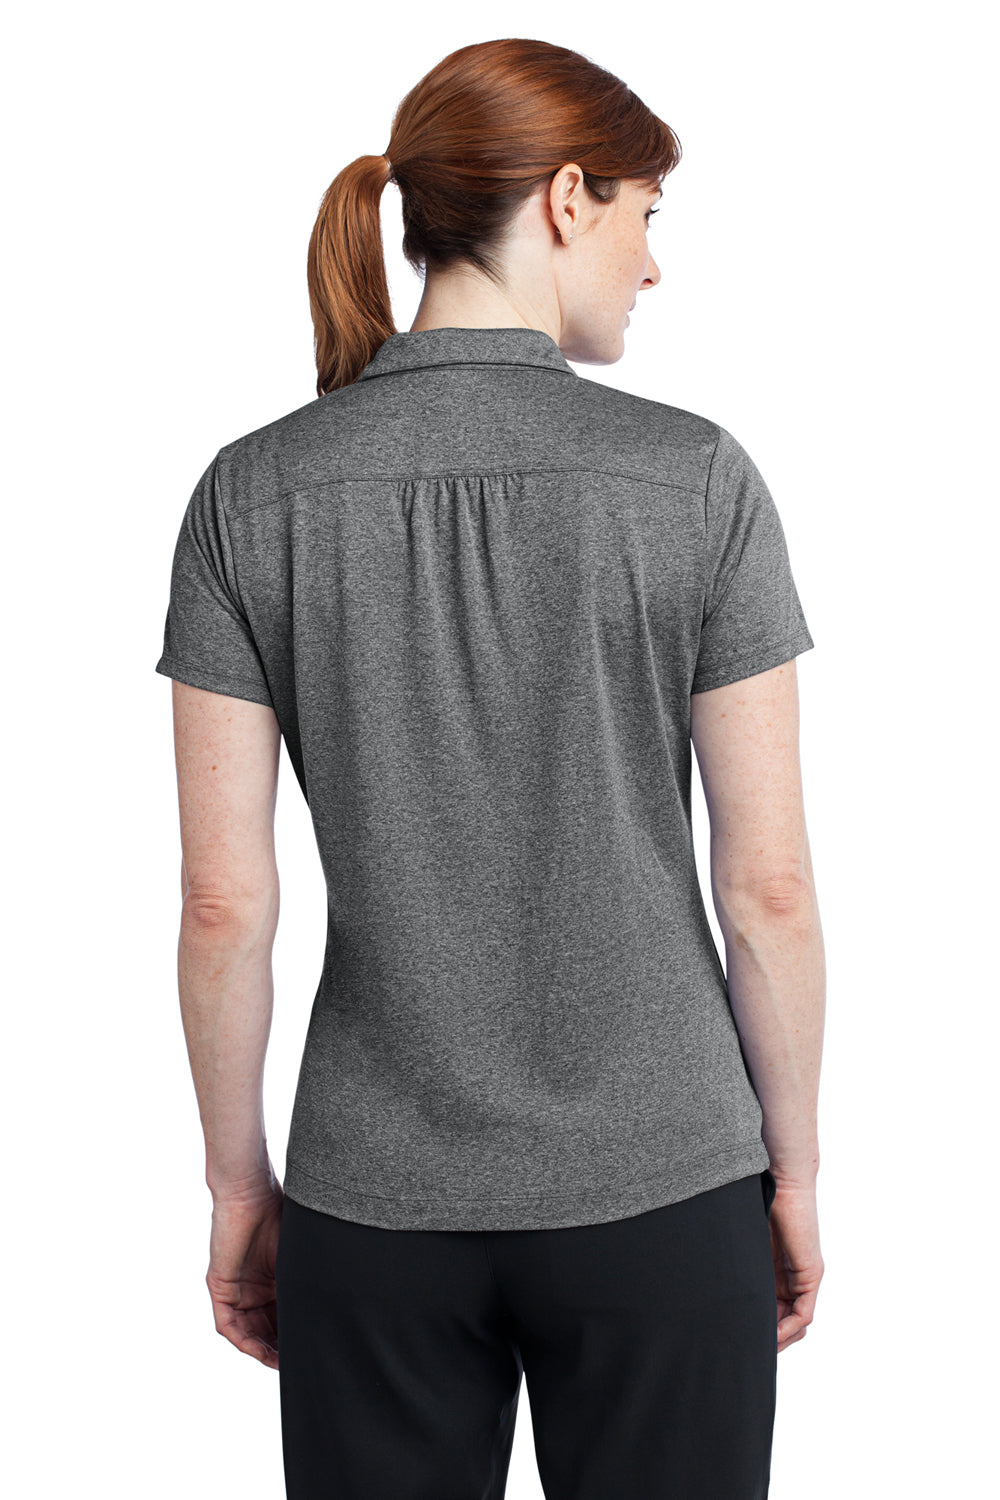 Nike 474455 Womens Dri-Fit Moisture Wicking Short Sleeve Polo Shirt Heather Carbon Grey Back